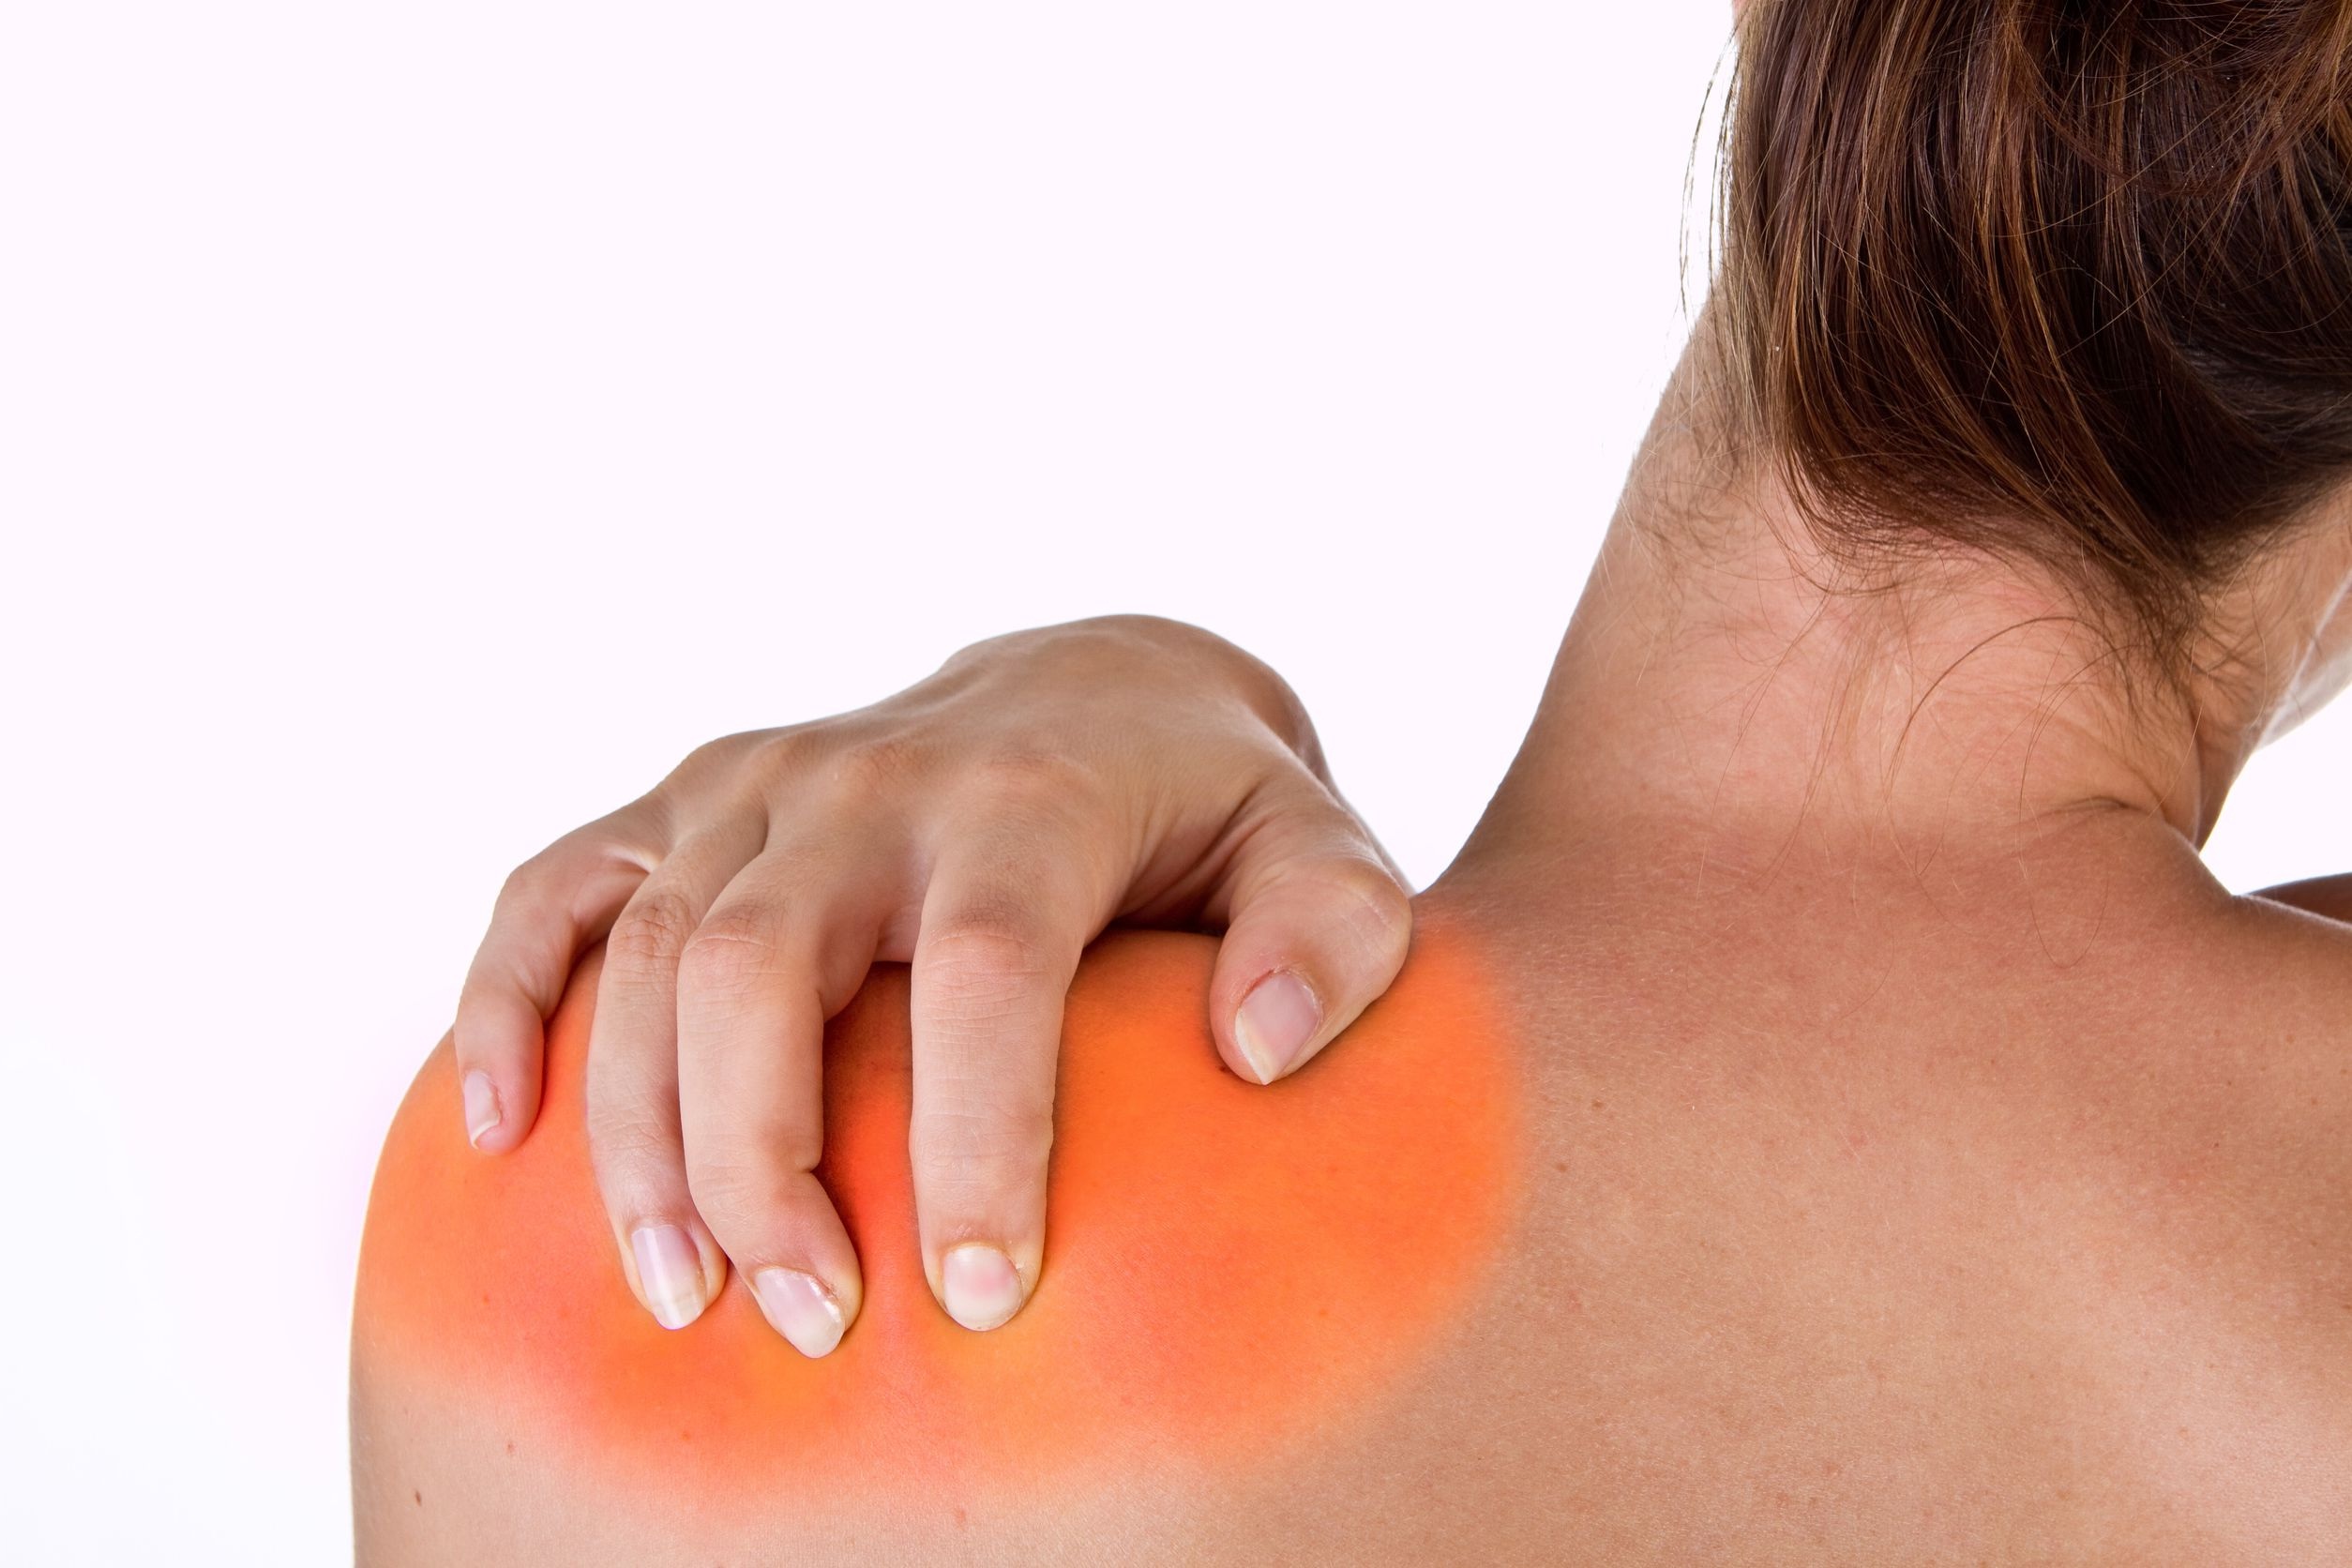 shoulder pain, rotator cuff injury,
                              deltoid tear, medical massage can help